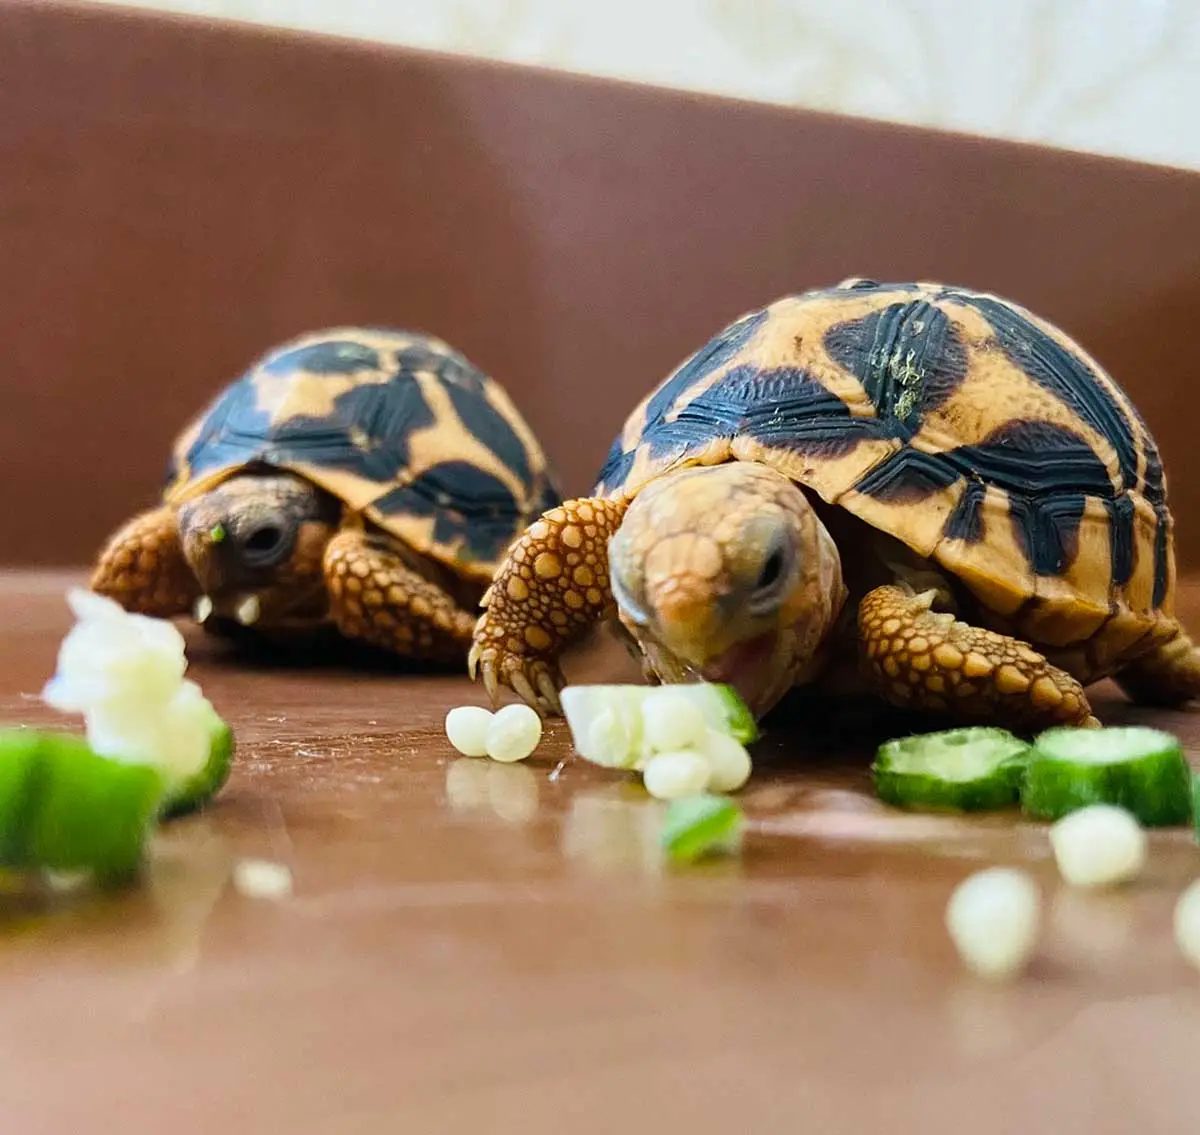 tortoises eating greens